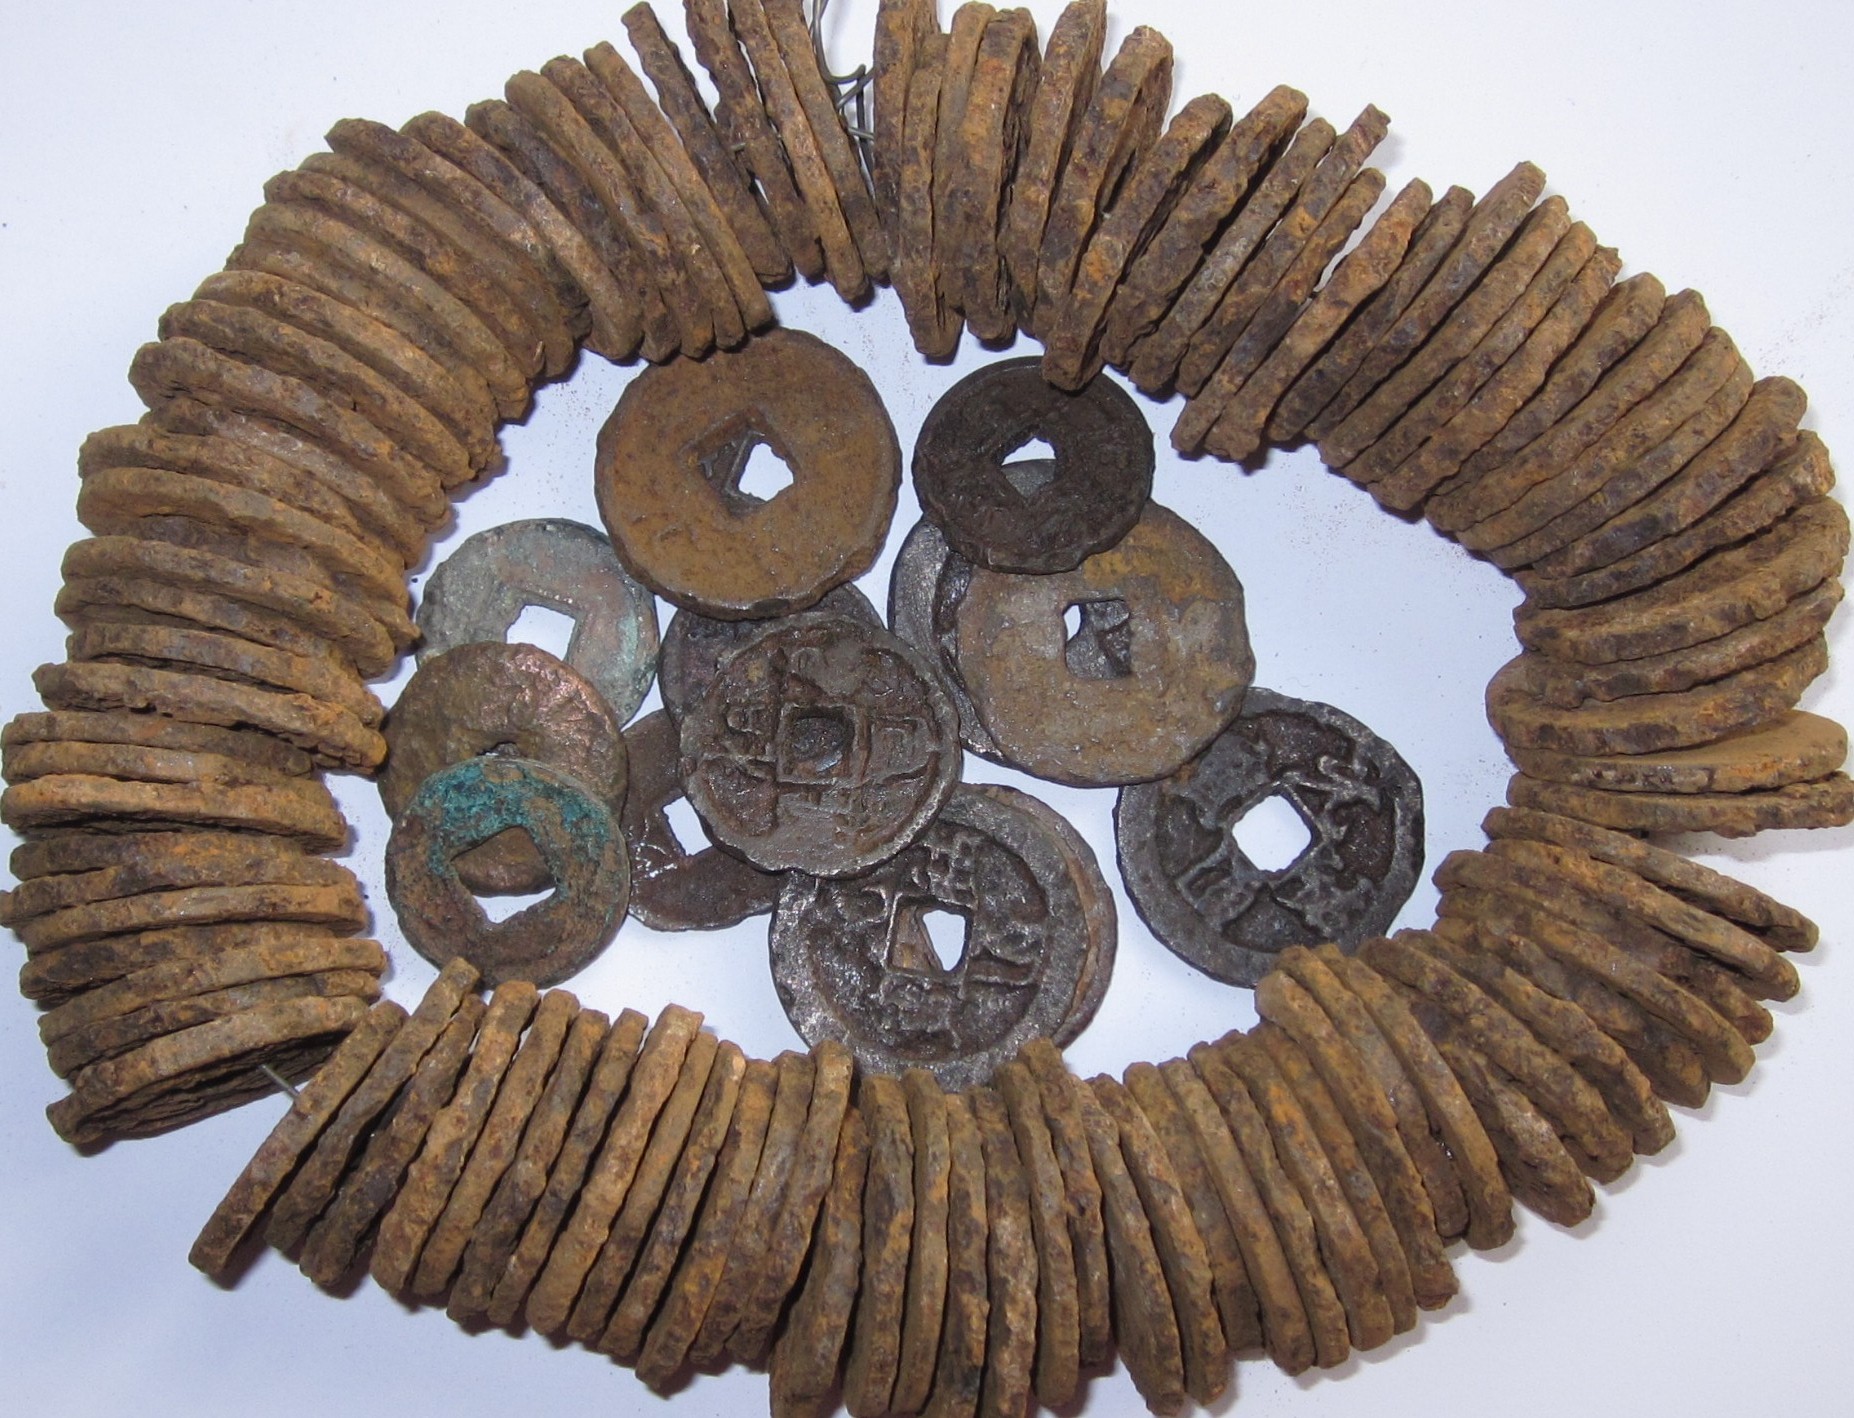 K8802, North Song Dynasty Iron Coins, 50 Pcs Wholesale, China AD 1000-1100